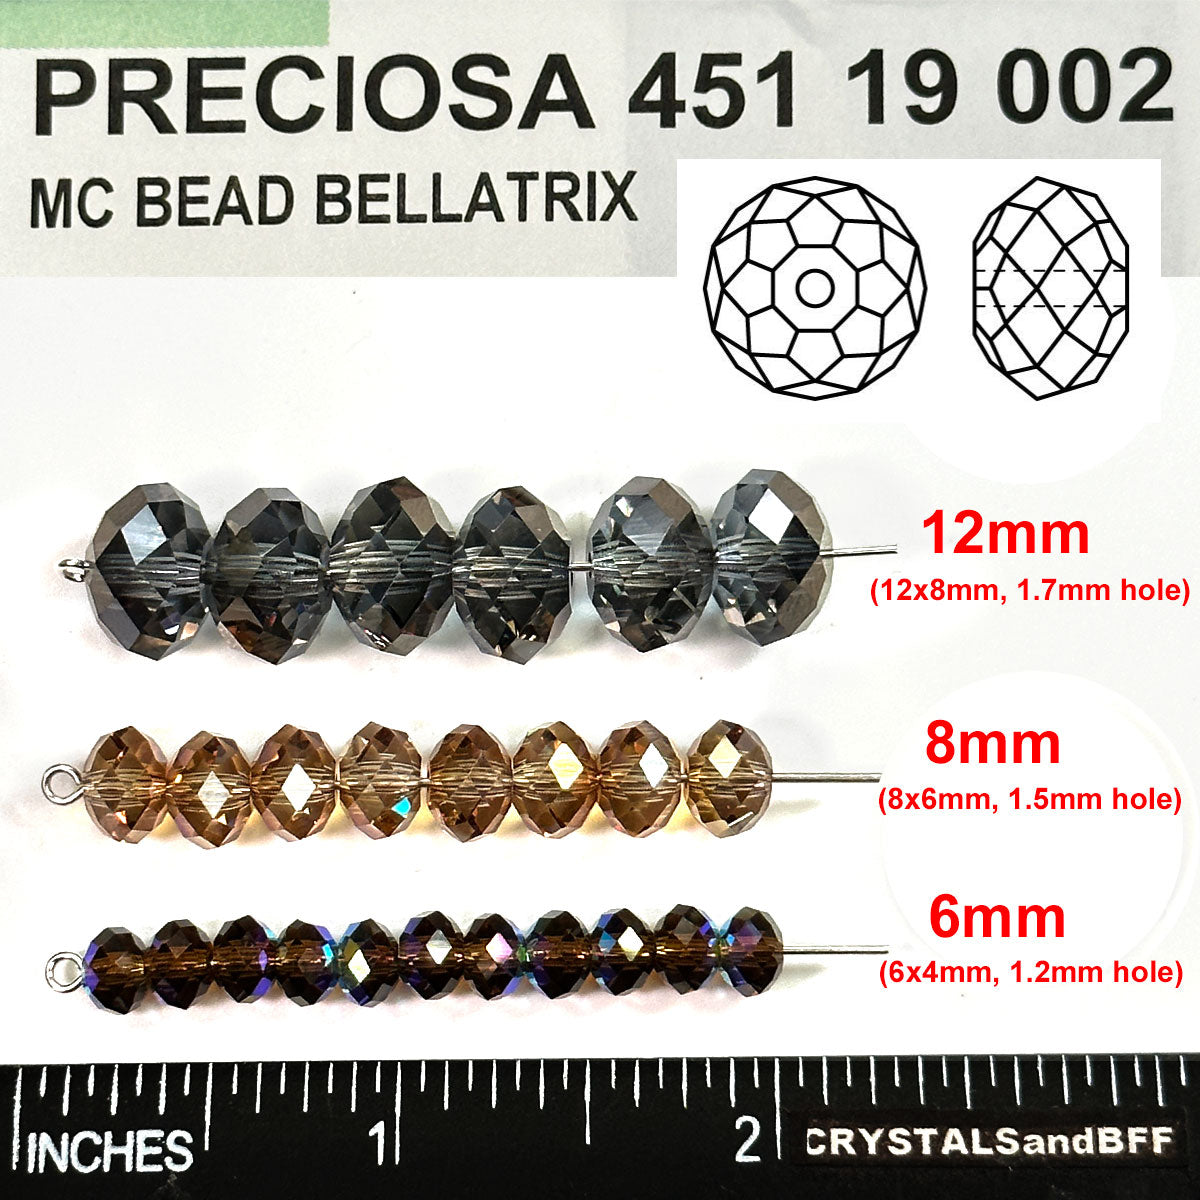 Crystal Honey coated, Czech Machine Cut Bellatrix Crystal Beads, Preciosa 451-19-002, 6mm, 8mm, 12mm, beige spacer beads, #5040 Briolette cut